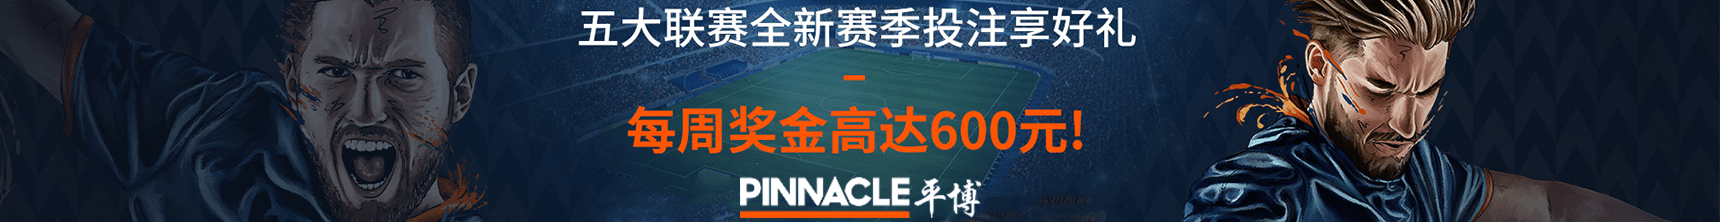 Pinnacle平博 五大联赛